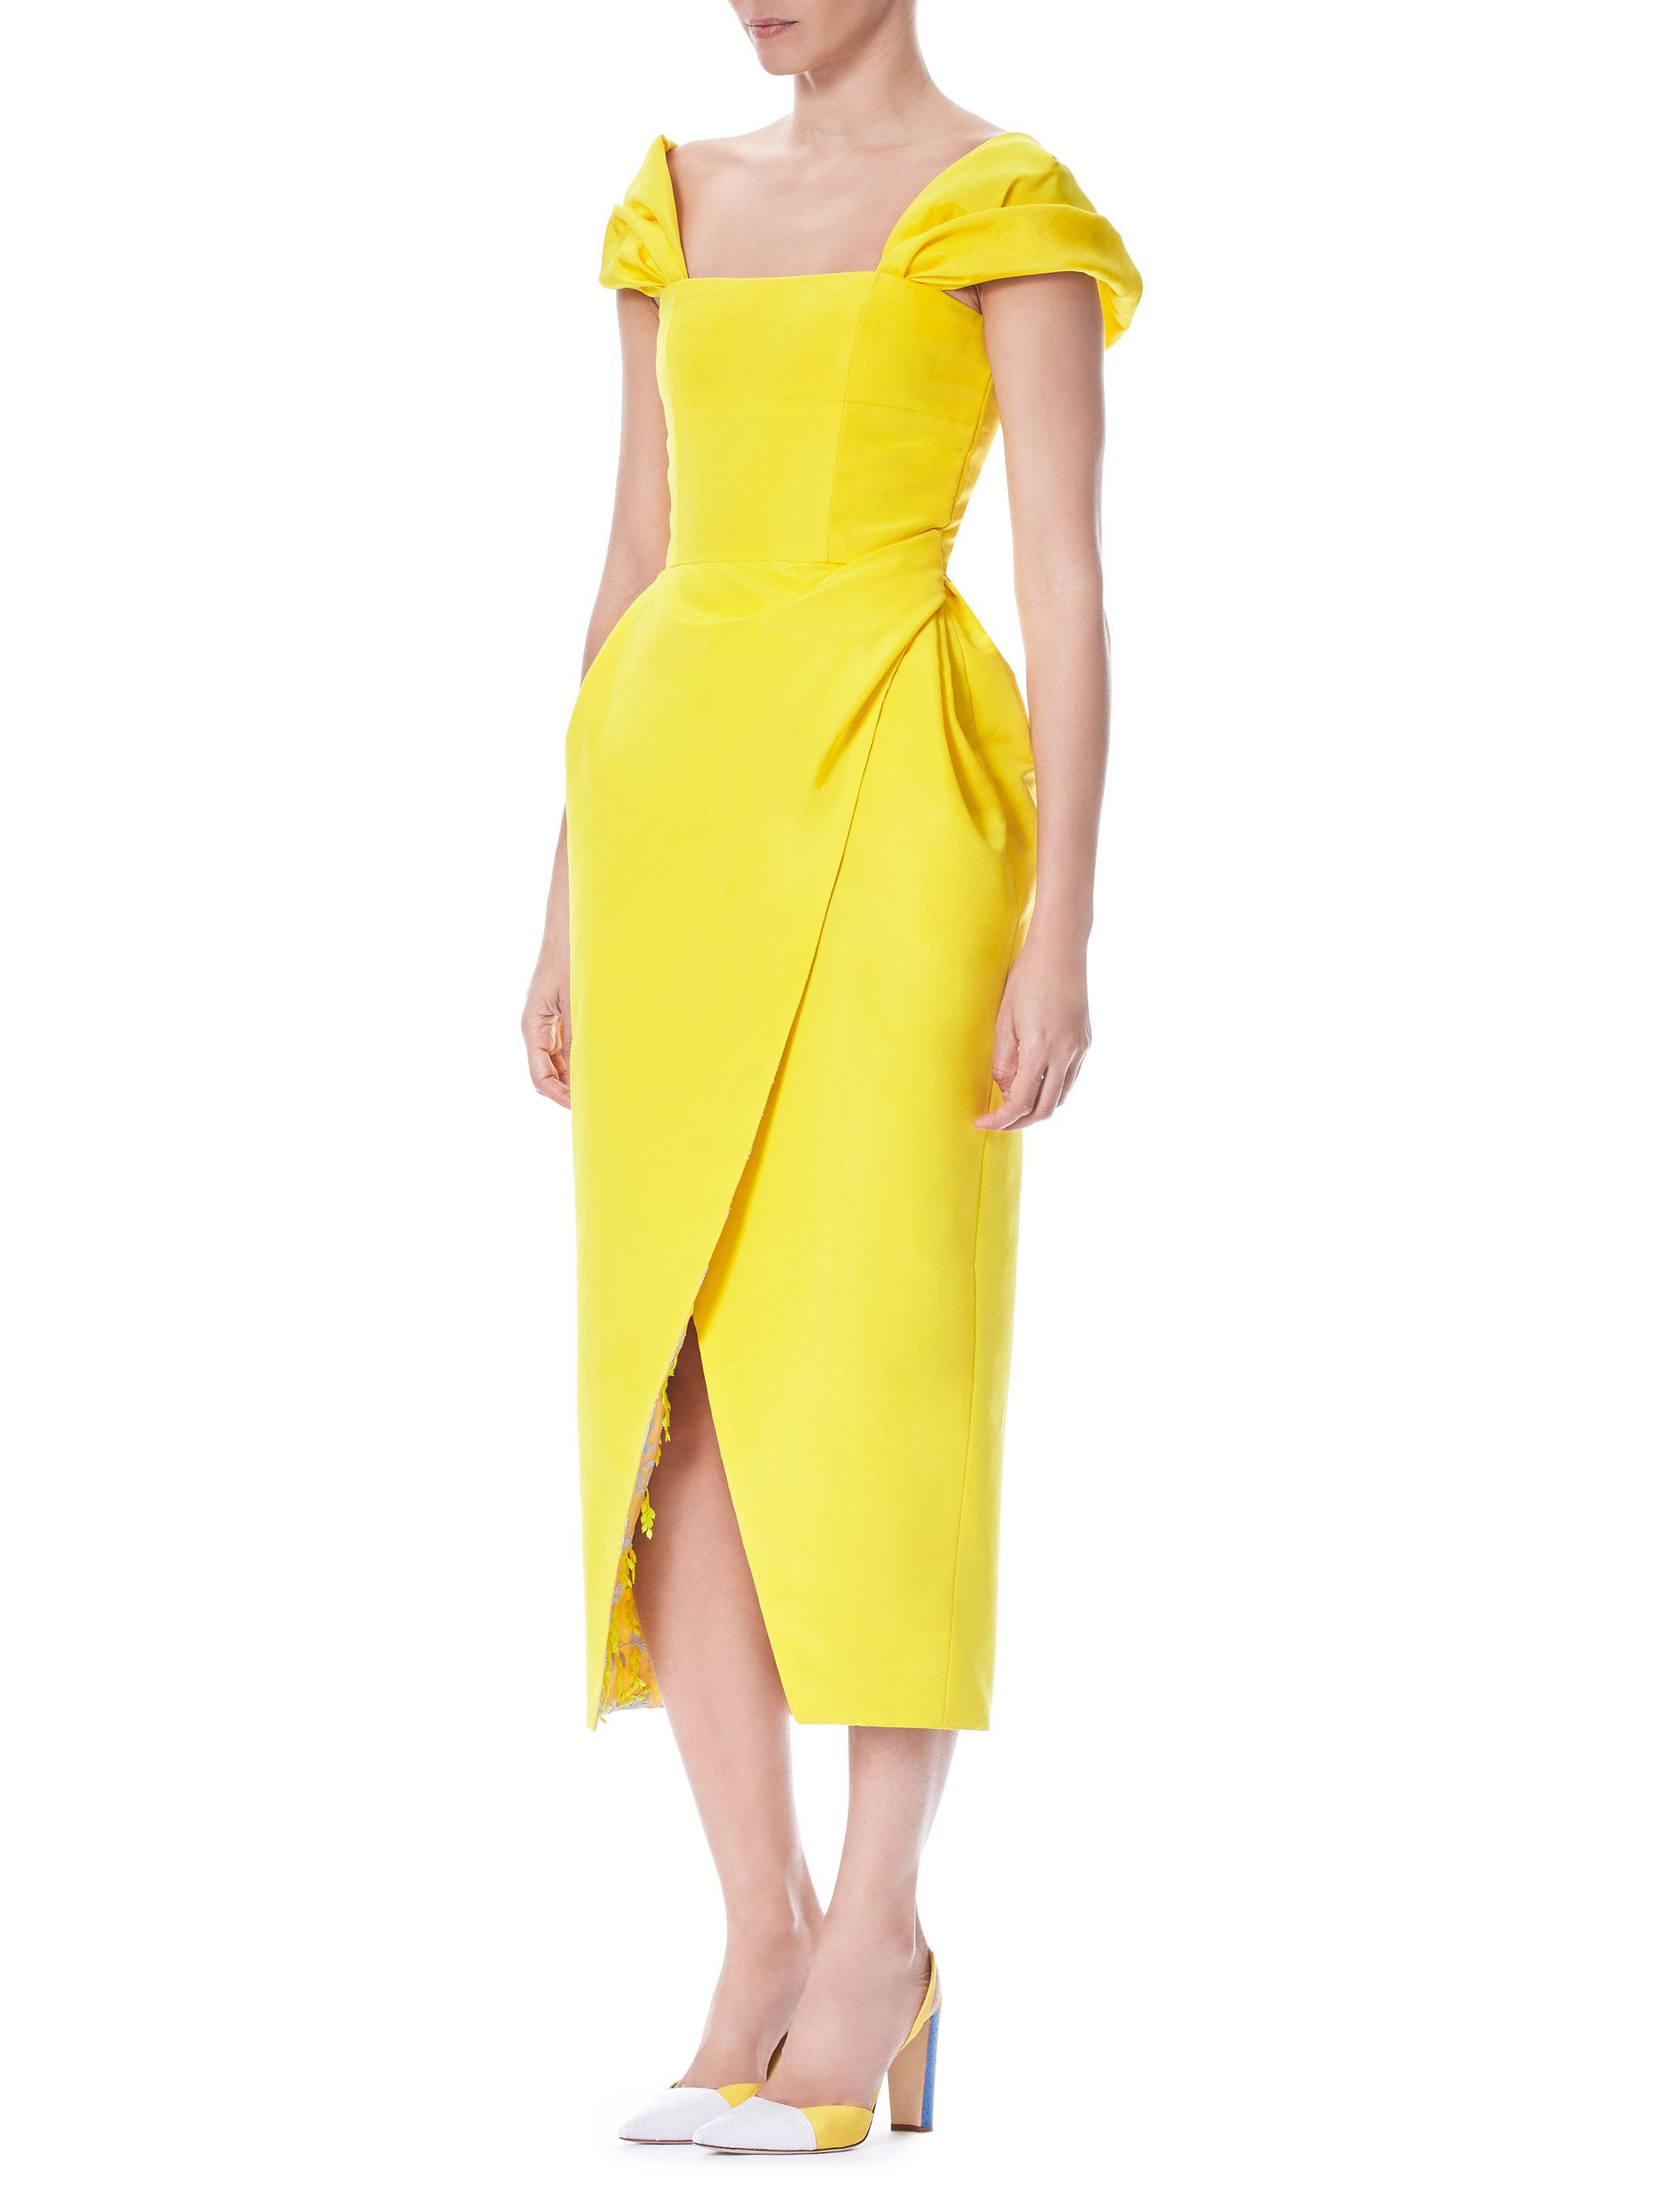 Carolina Herrera Off-the-shoulder Cocktail Sheath Dress in Yellow - Lyst